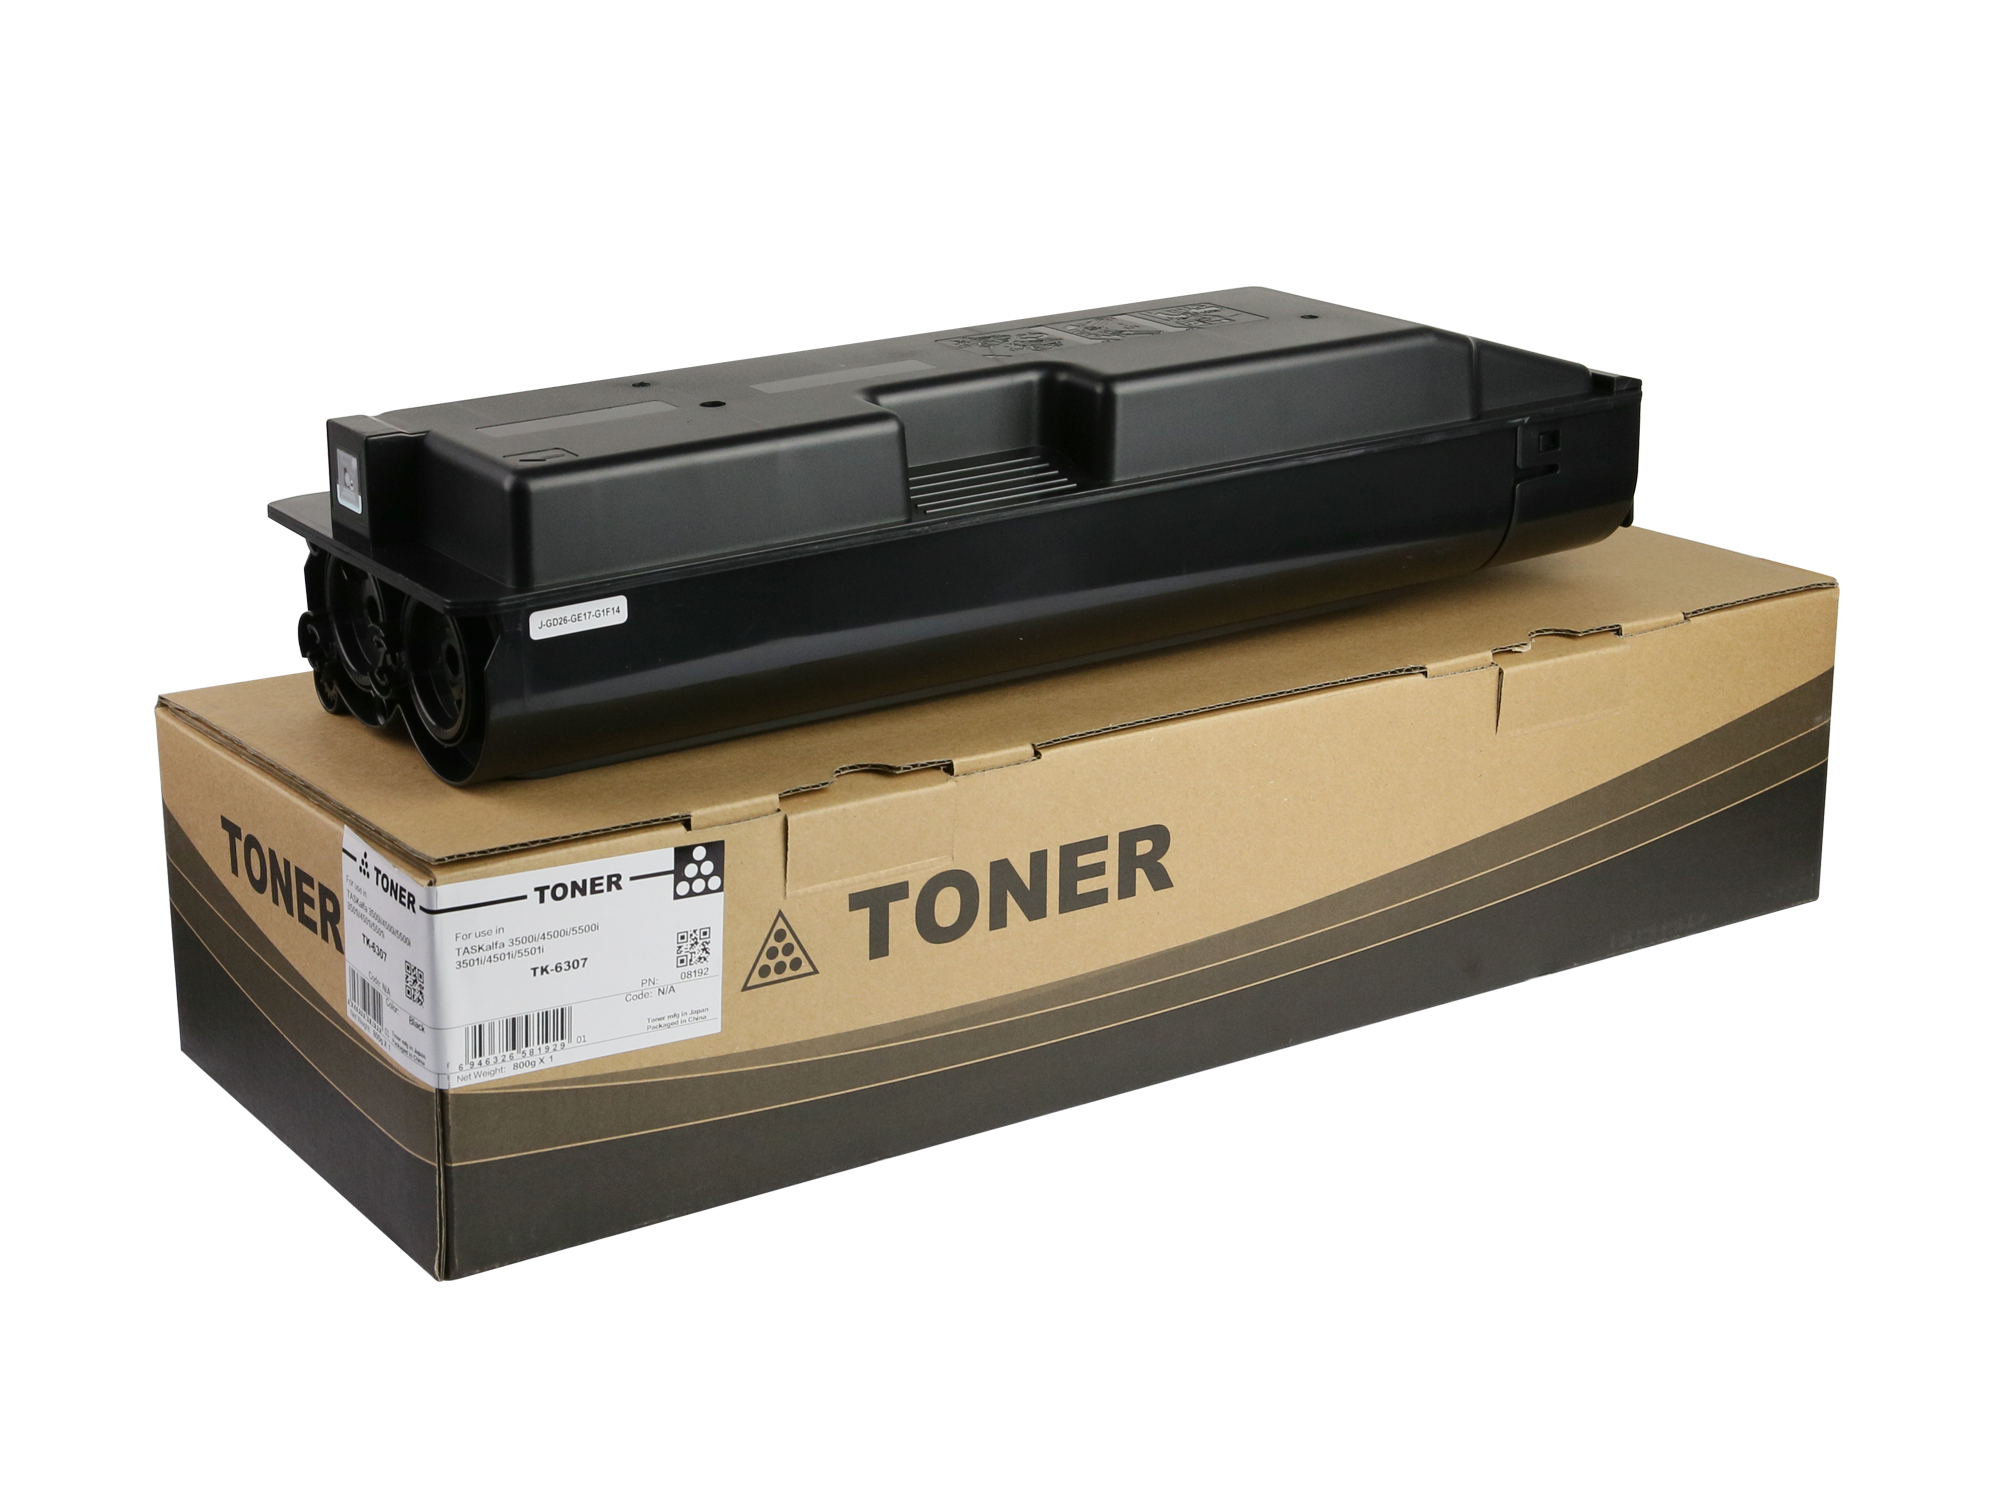 TK-6307 Toner Cartridge for Kyocera TASKalfa 3500i